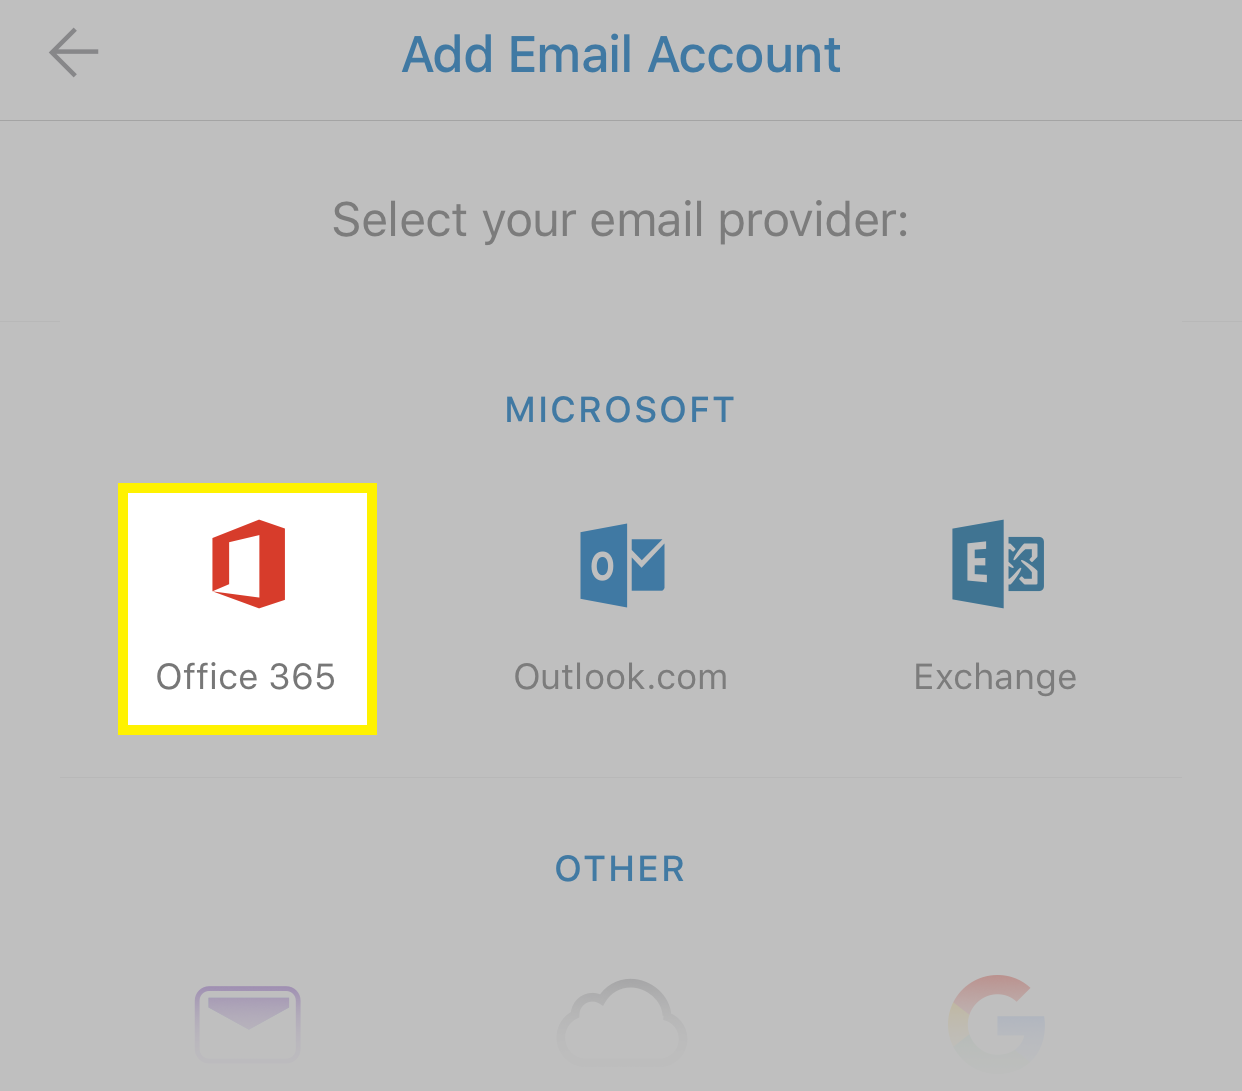 Tap Office 365